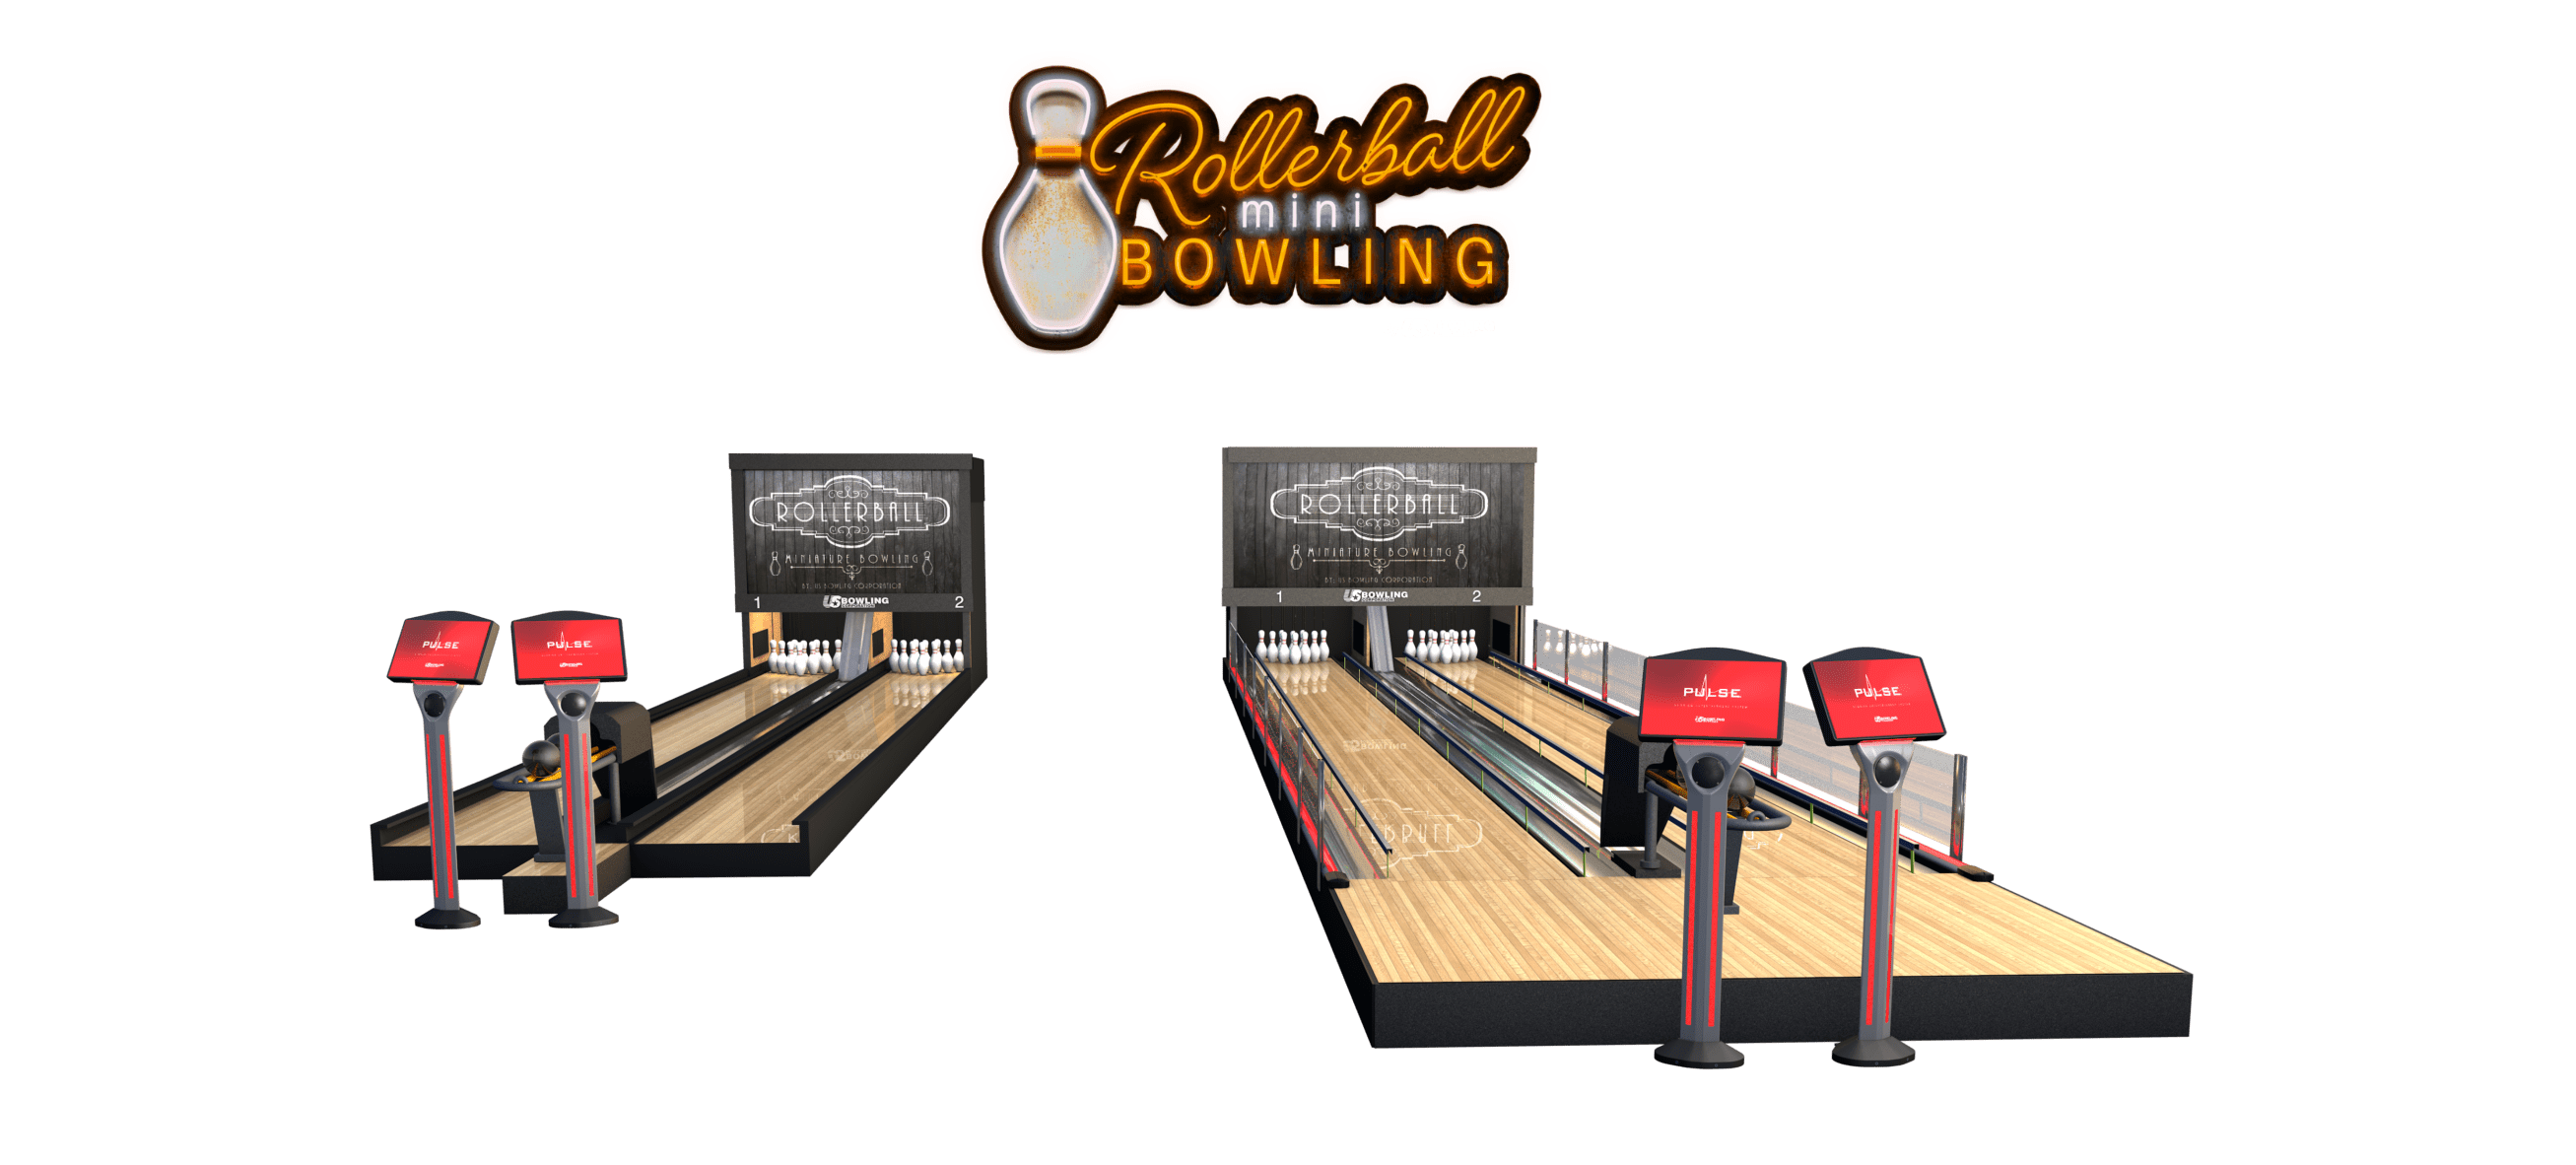 US mini bowling equipment